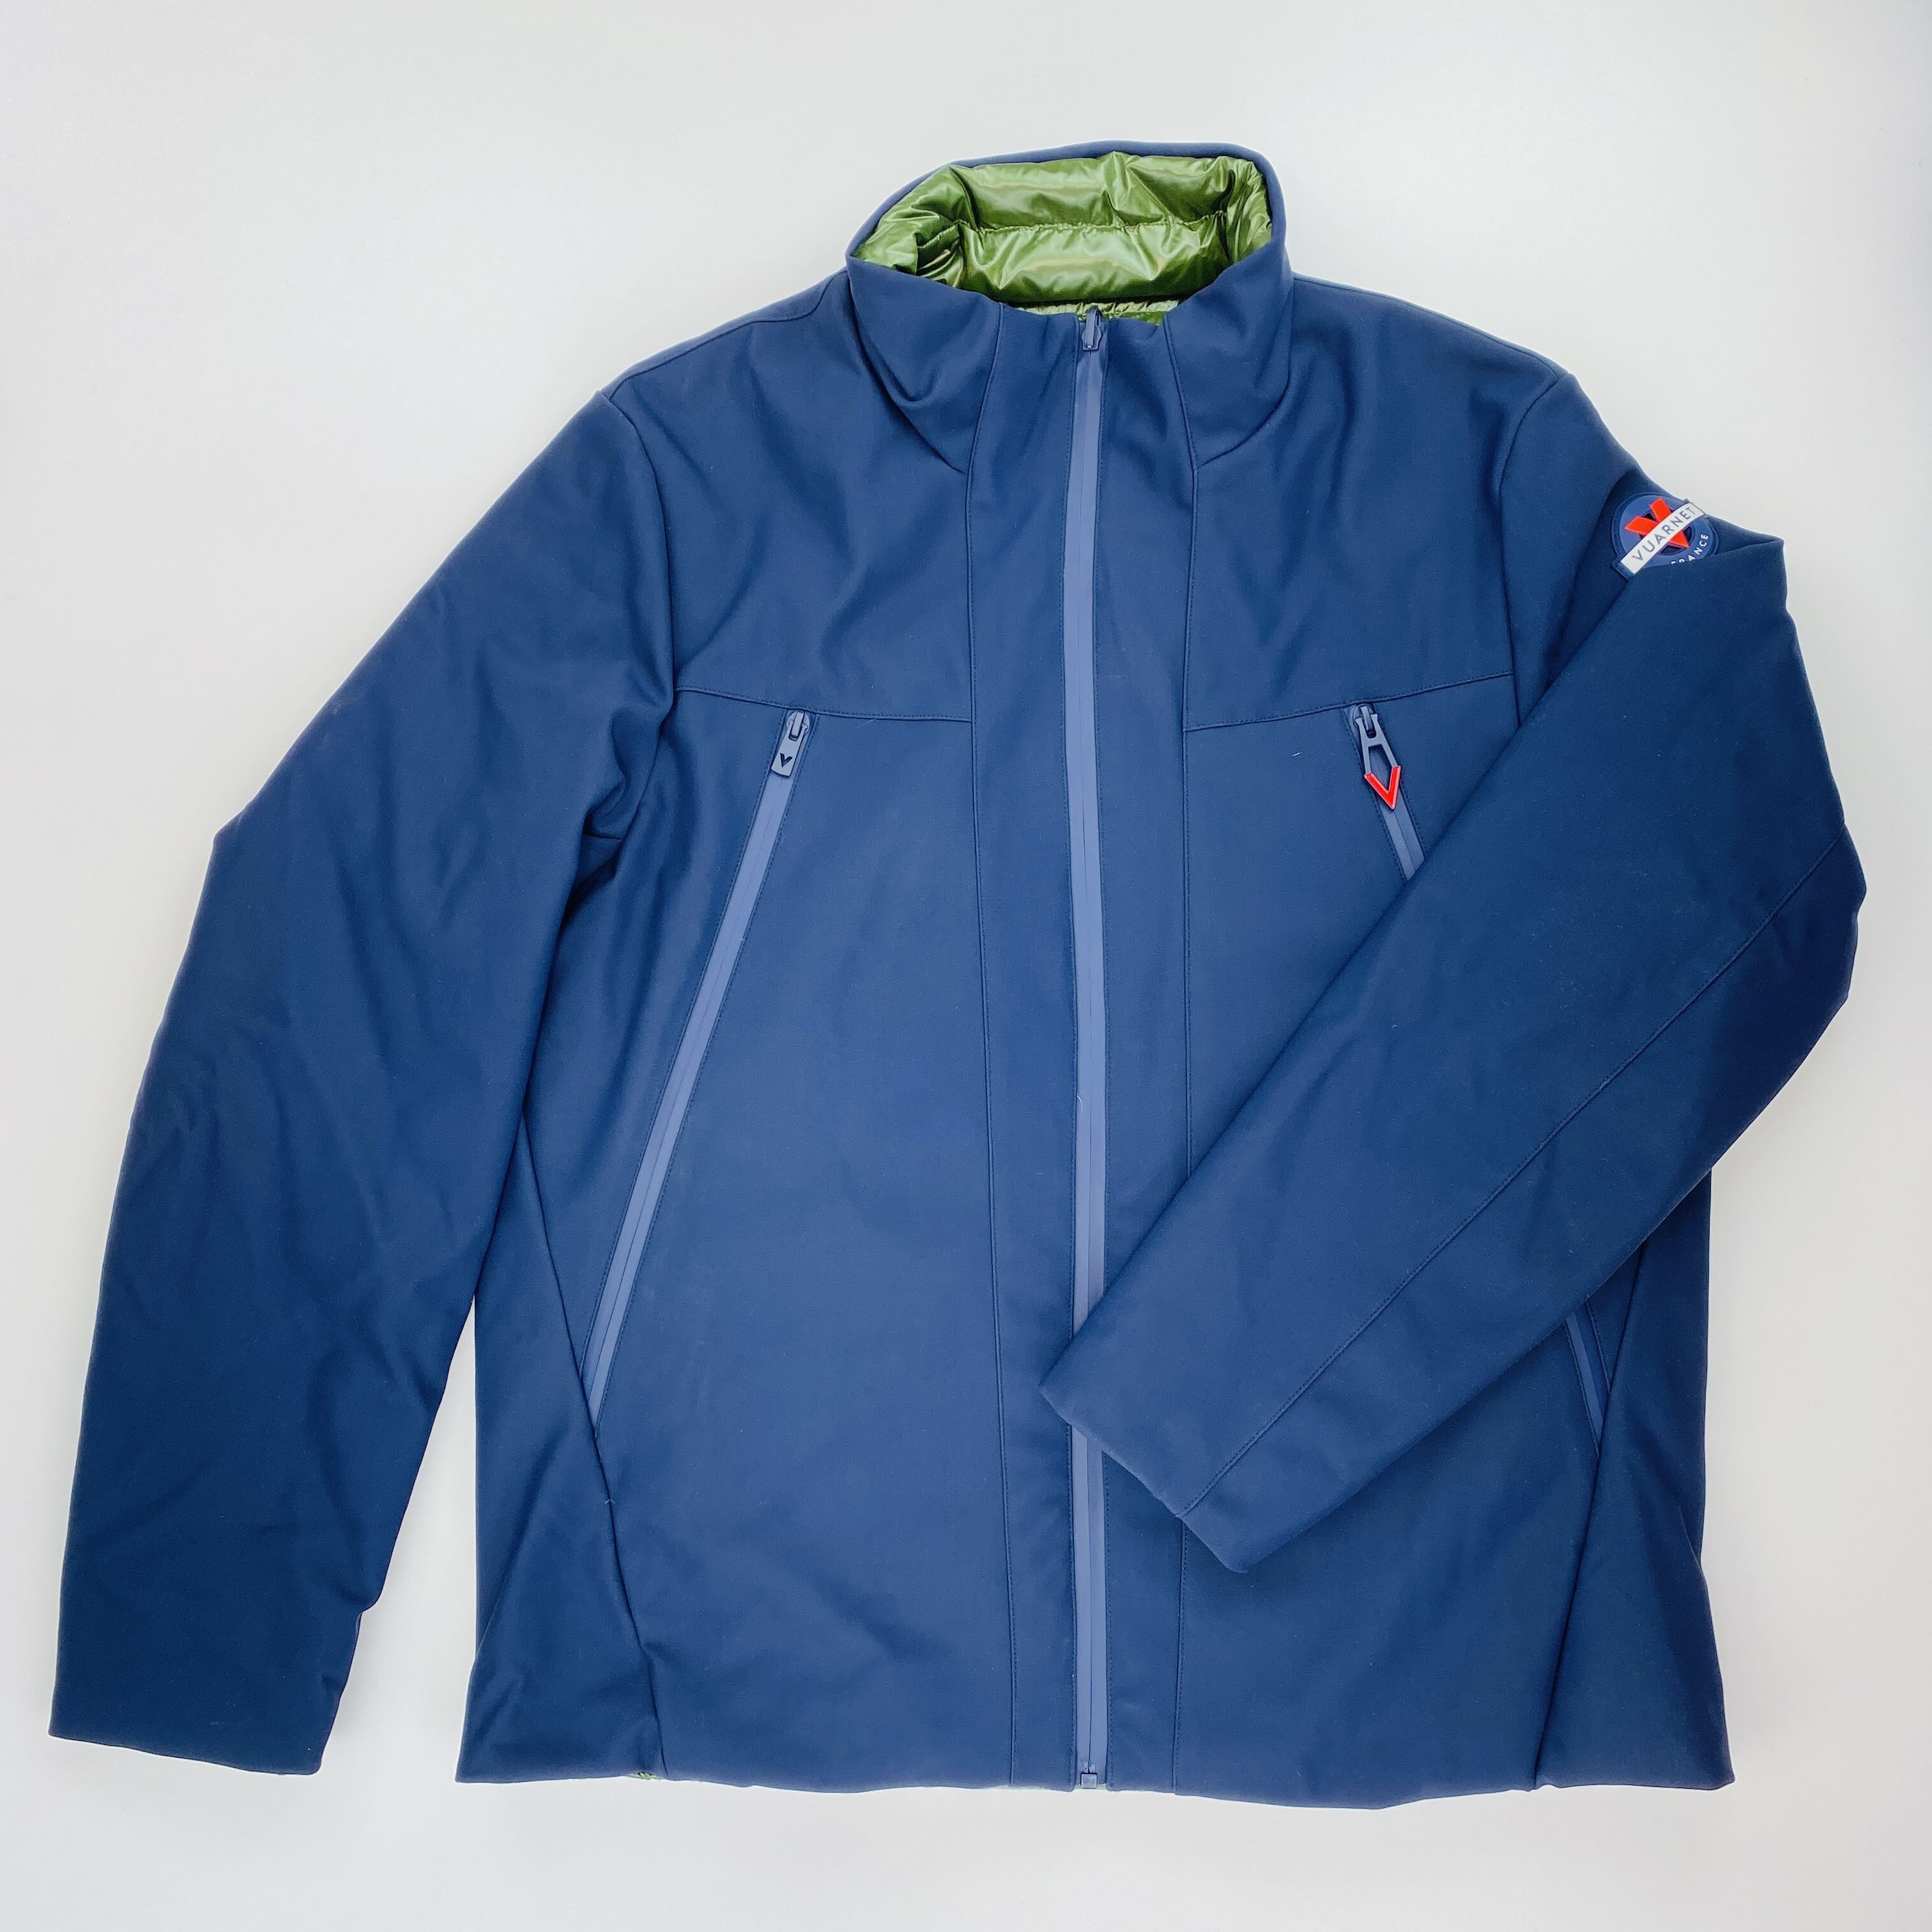 Vuarnet Lado Jacket - Giacca di seconda mano - Uomo - Olio blu - L | Hardloop